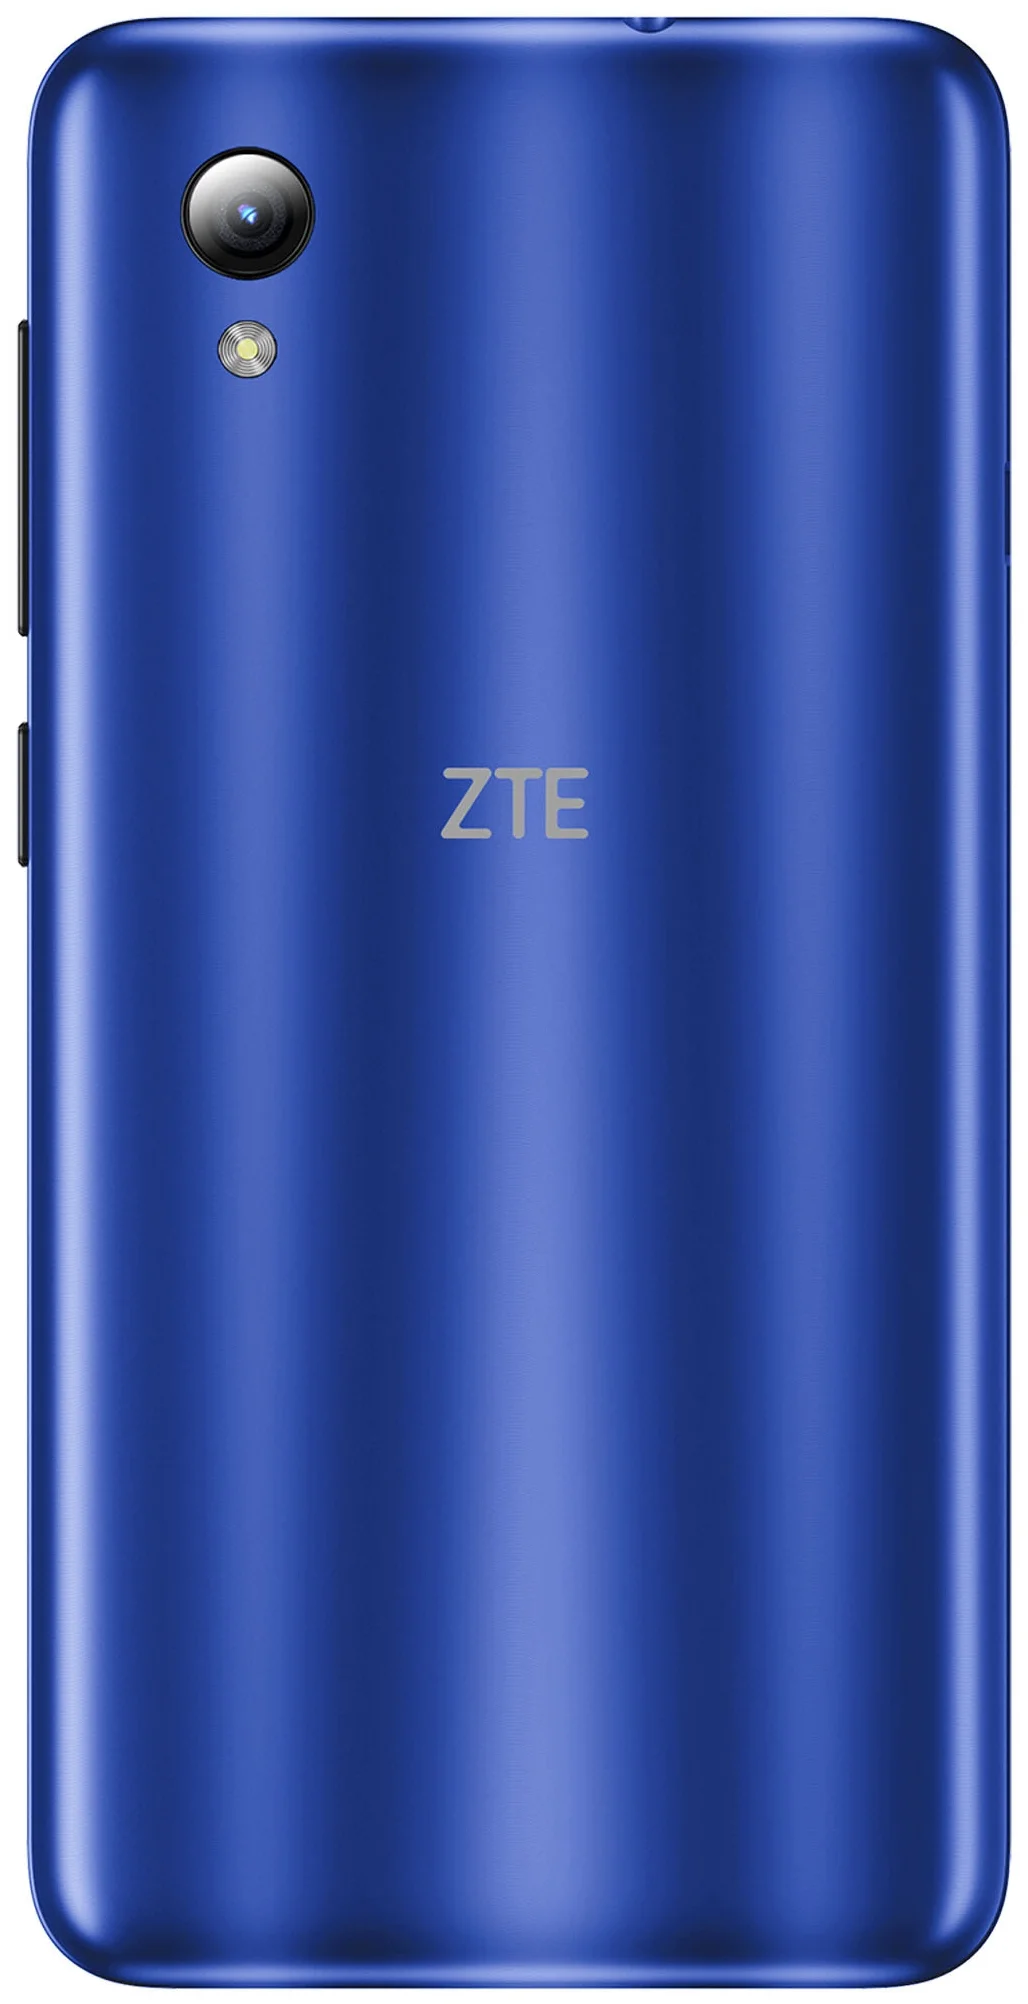 ZTE Blade L8 1/16GB - операционная система: Android 9 (Go edition)